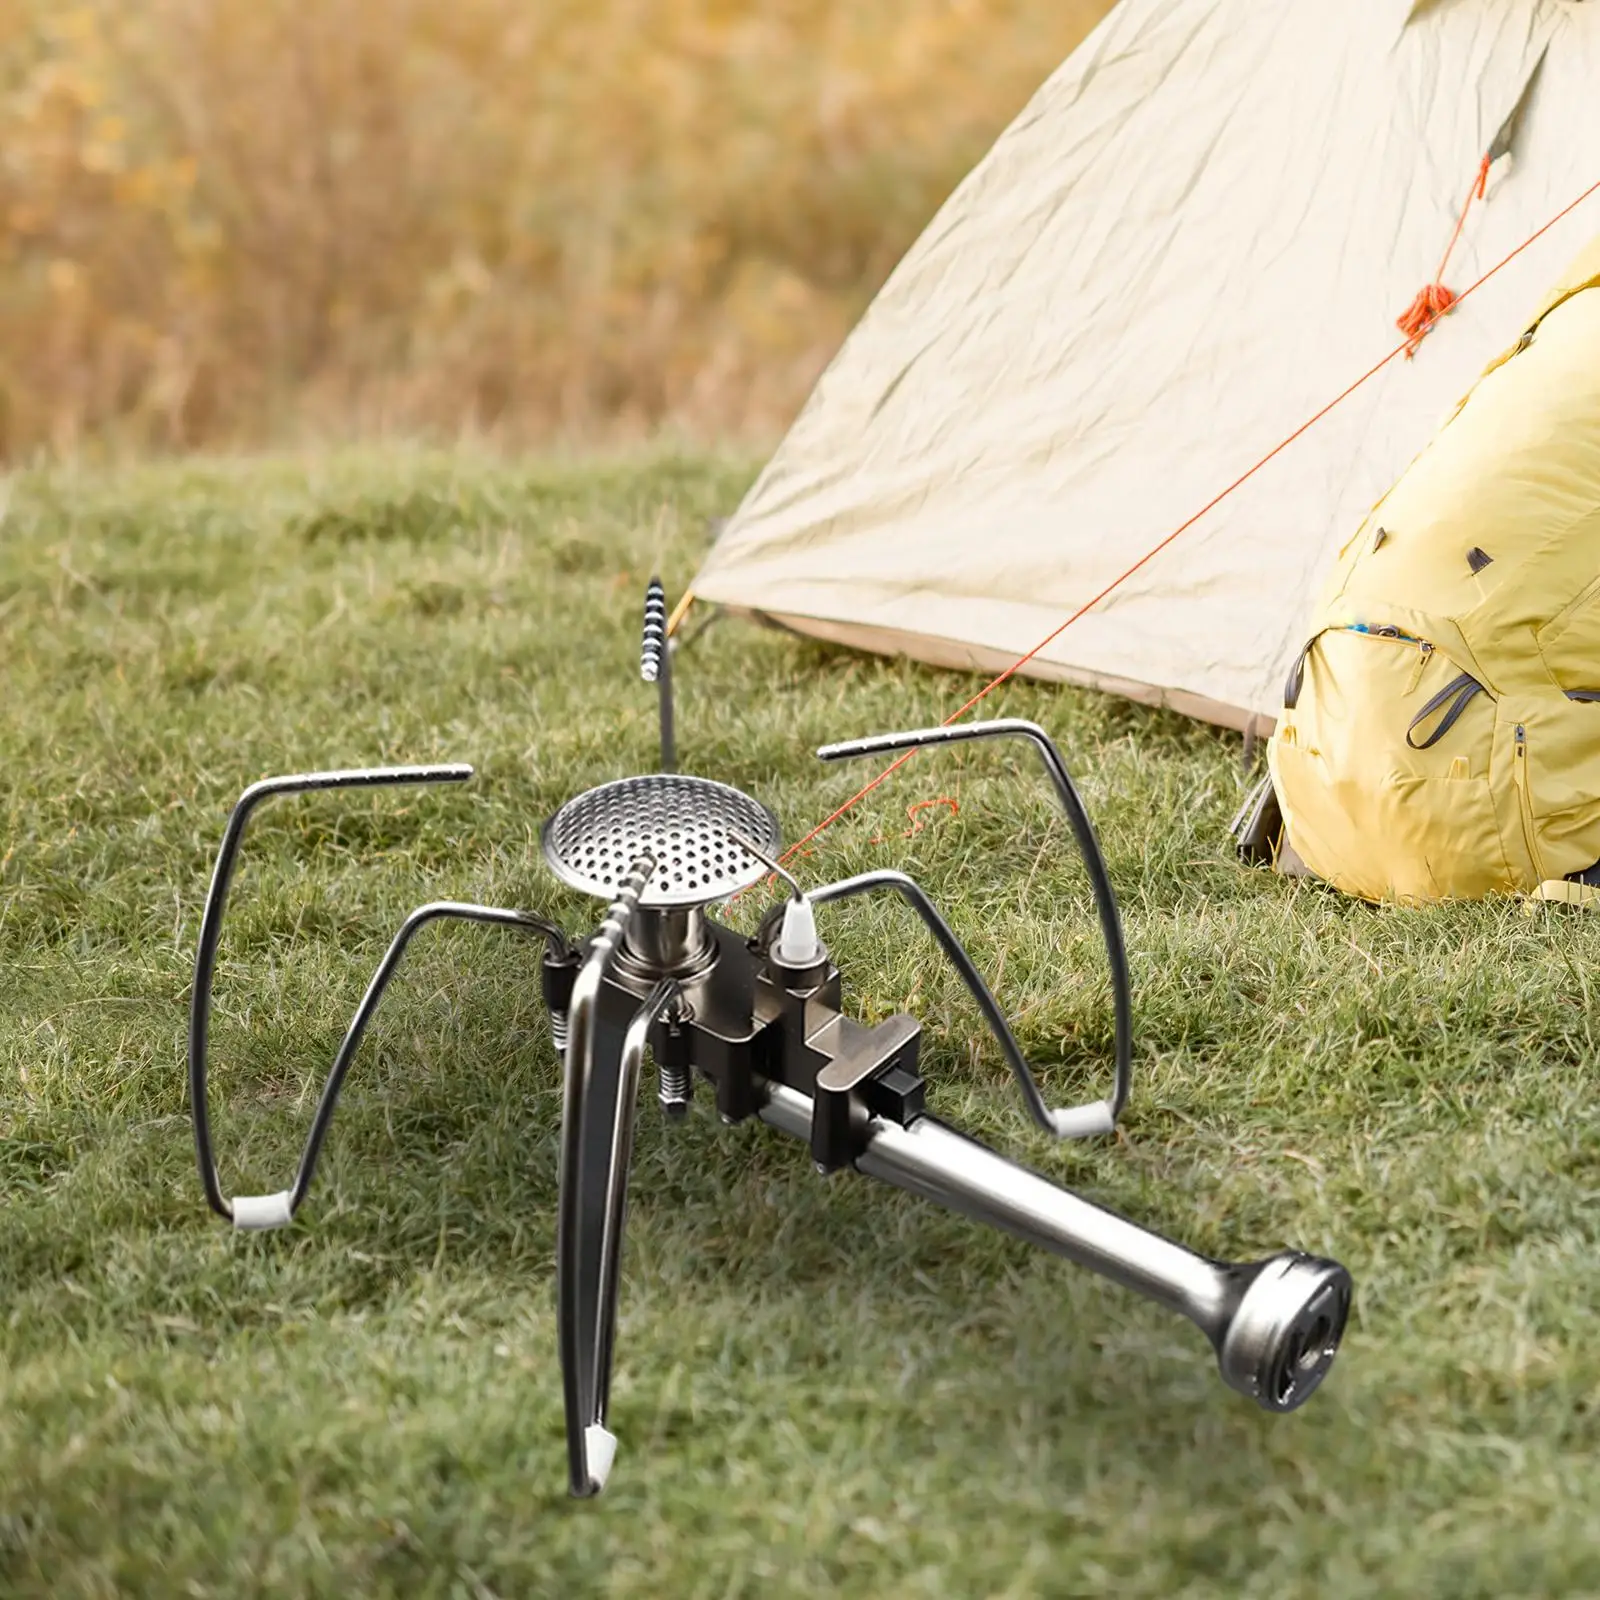 Folding Camping Stove Portable Camp Stove Head Convenient Aluminum Alloy Spider